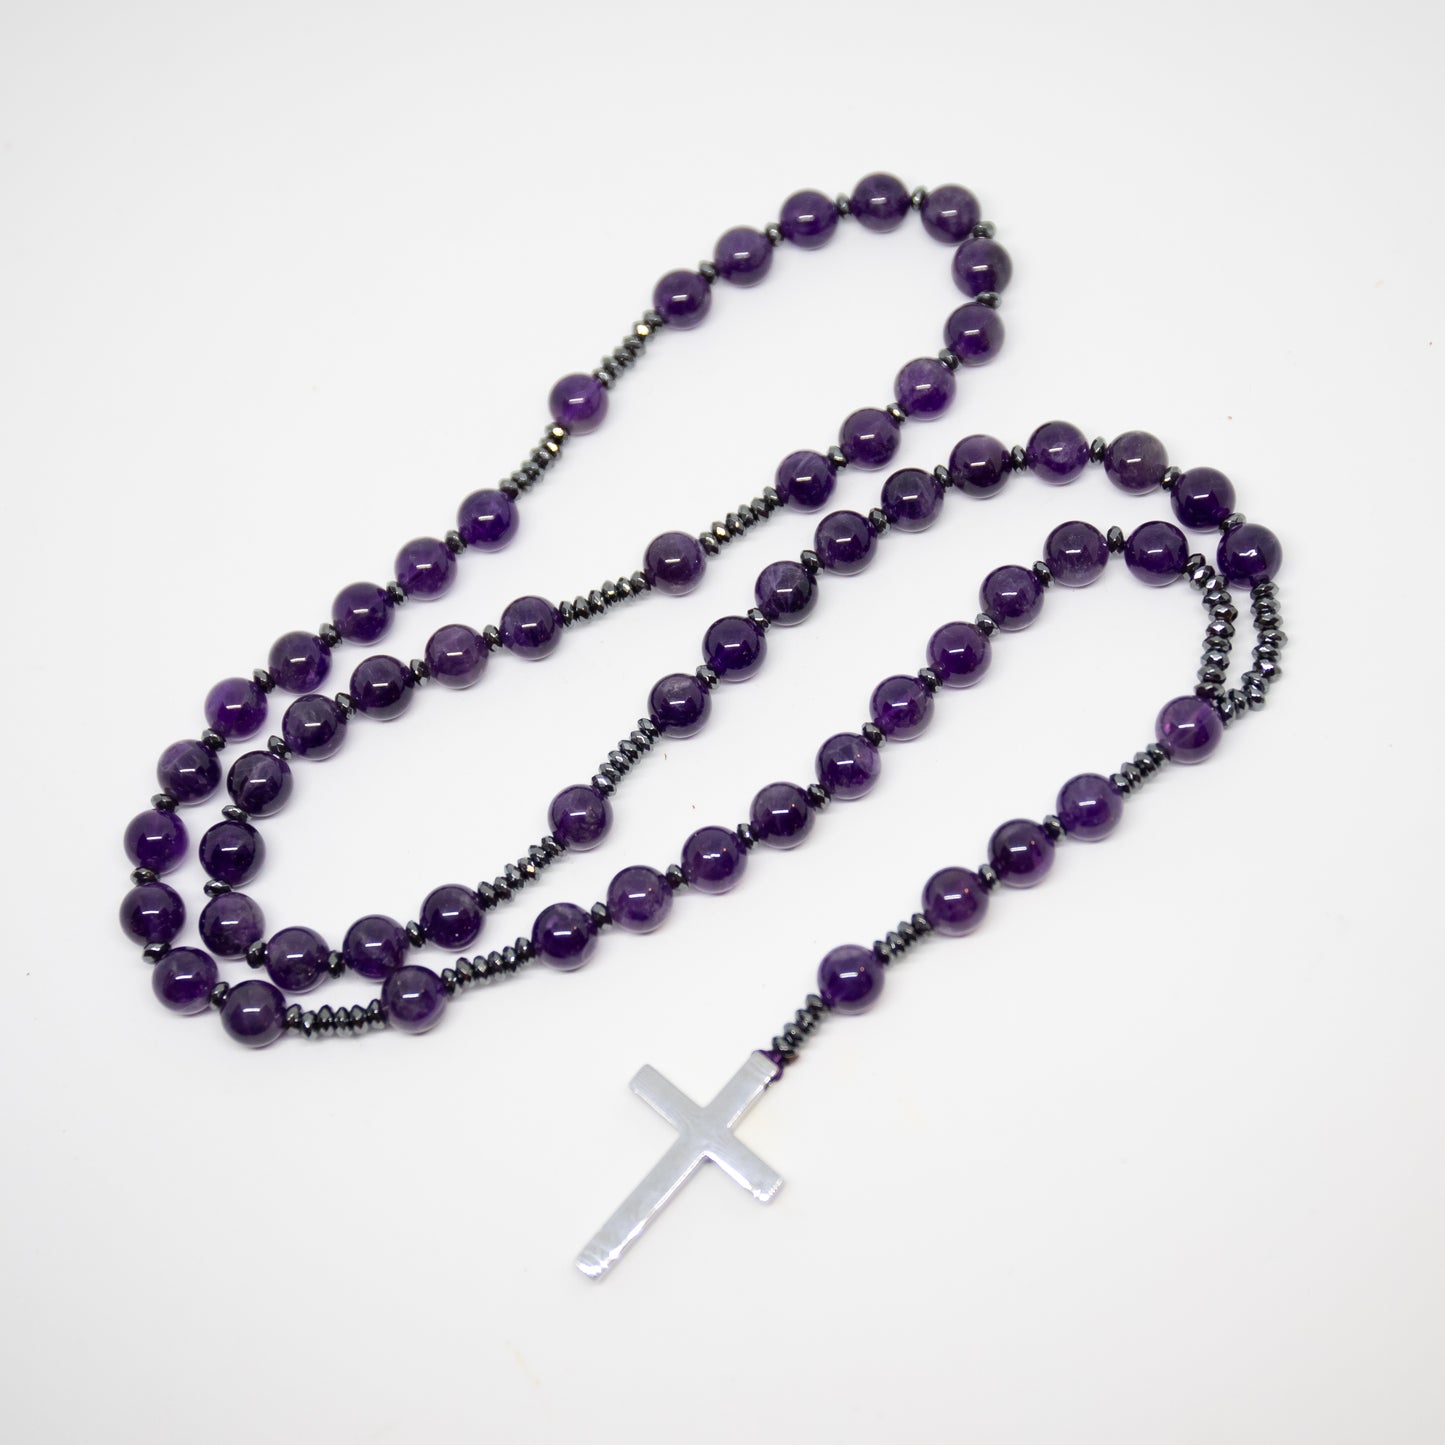 A Grade Amethyst Rosary - Prayer Beads - 8mm (1 Pack)